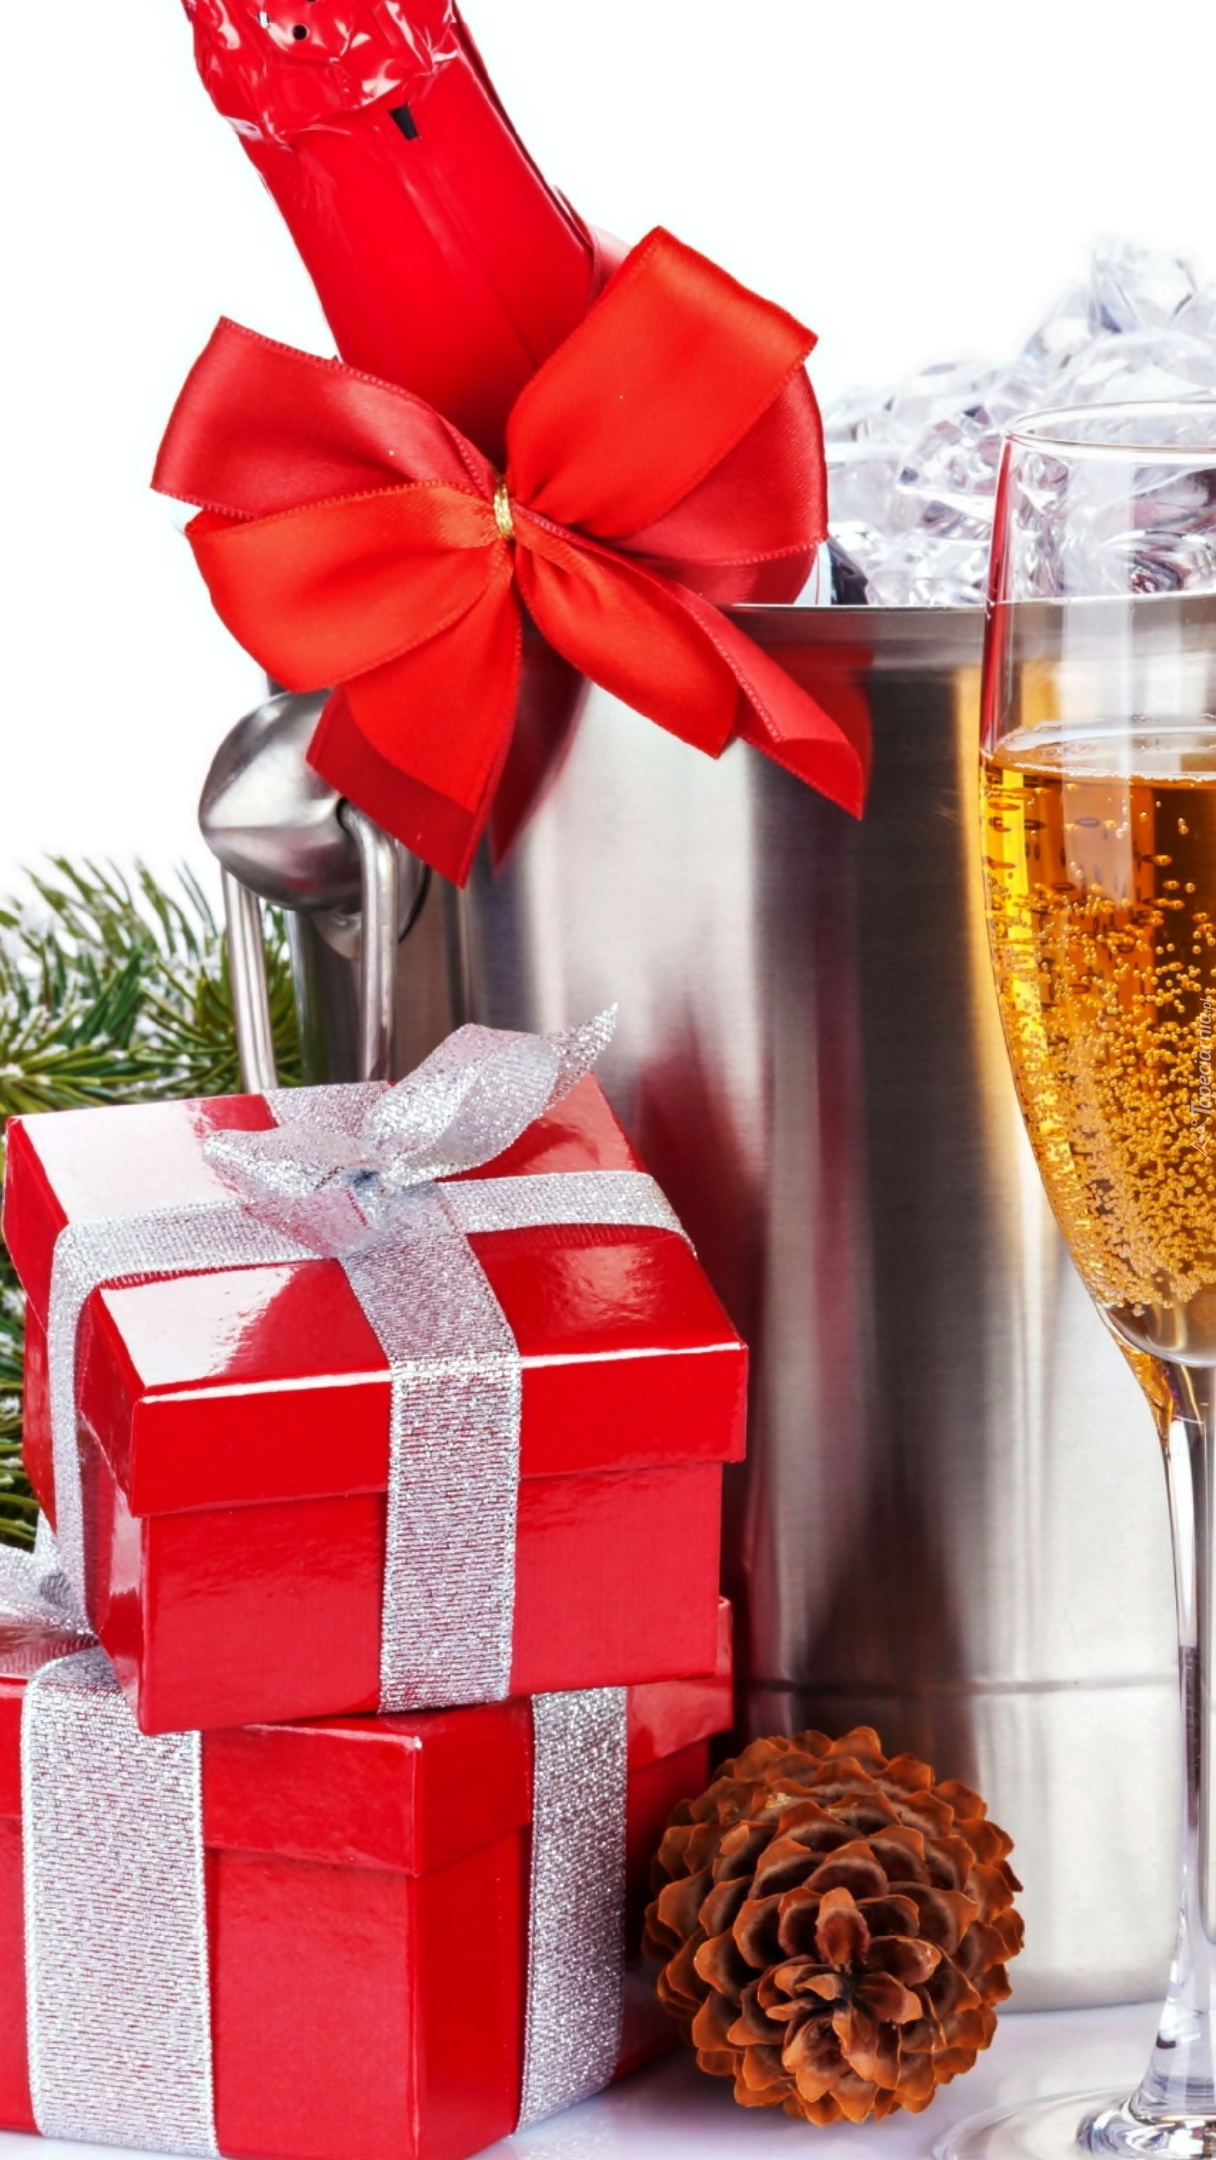 Kieliszek szampana, prezenty i szyszka